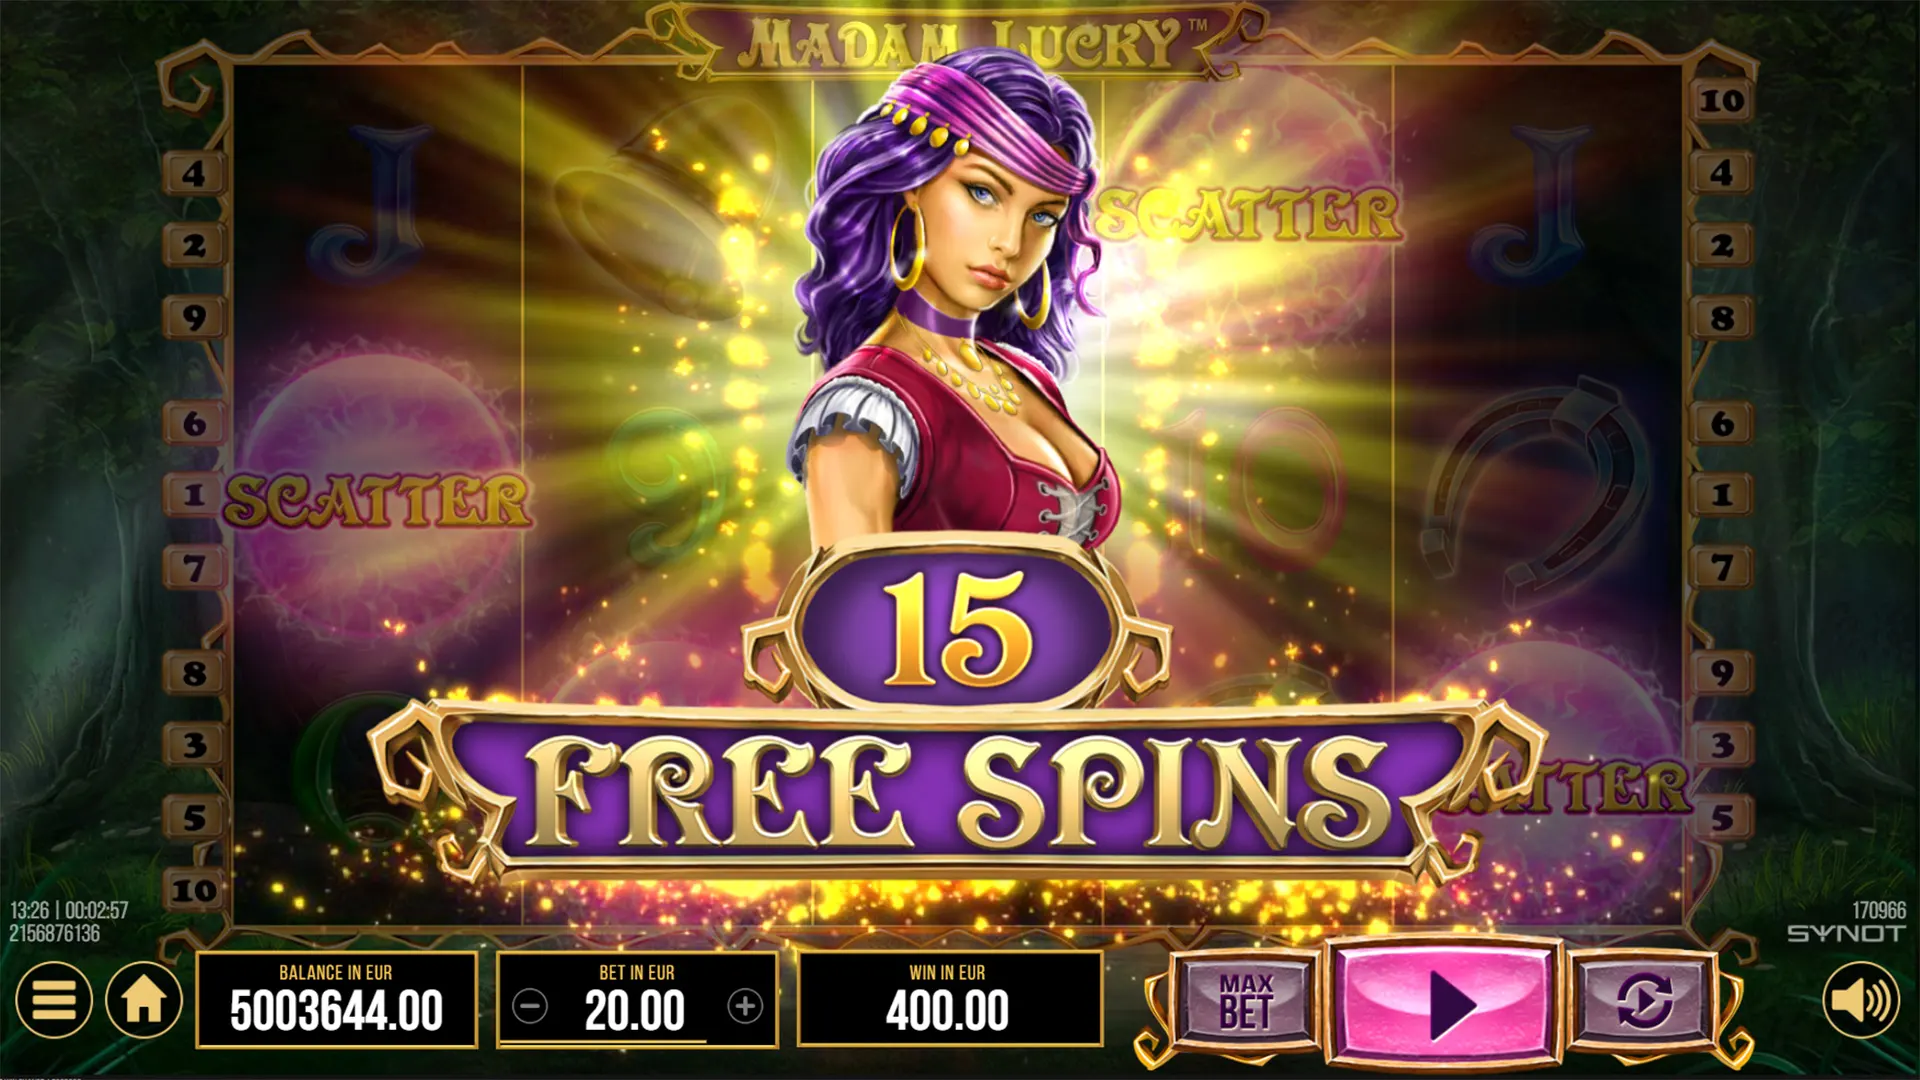 madam lucky Free Spins